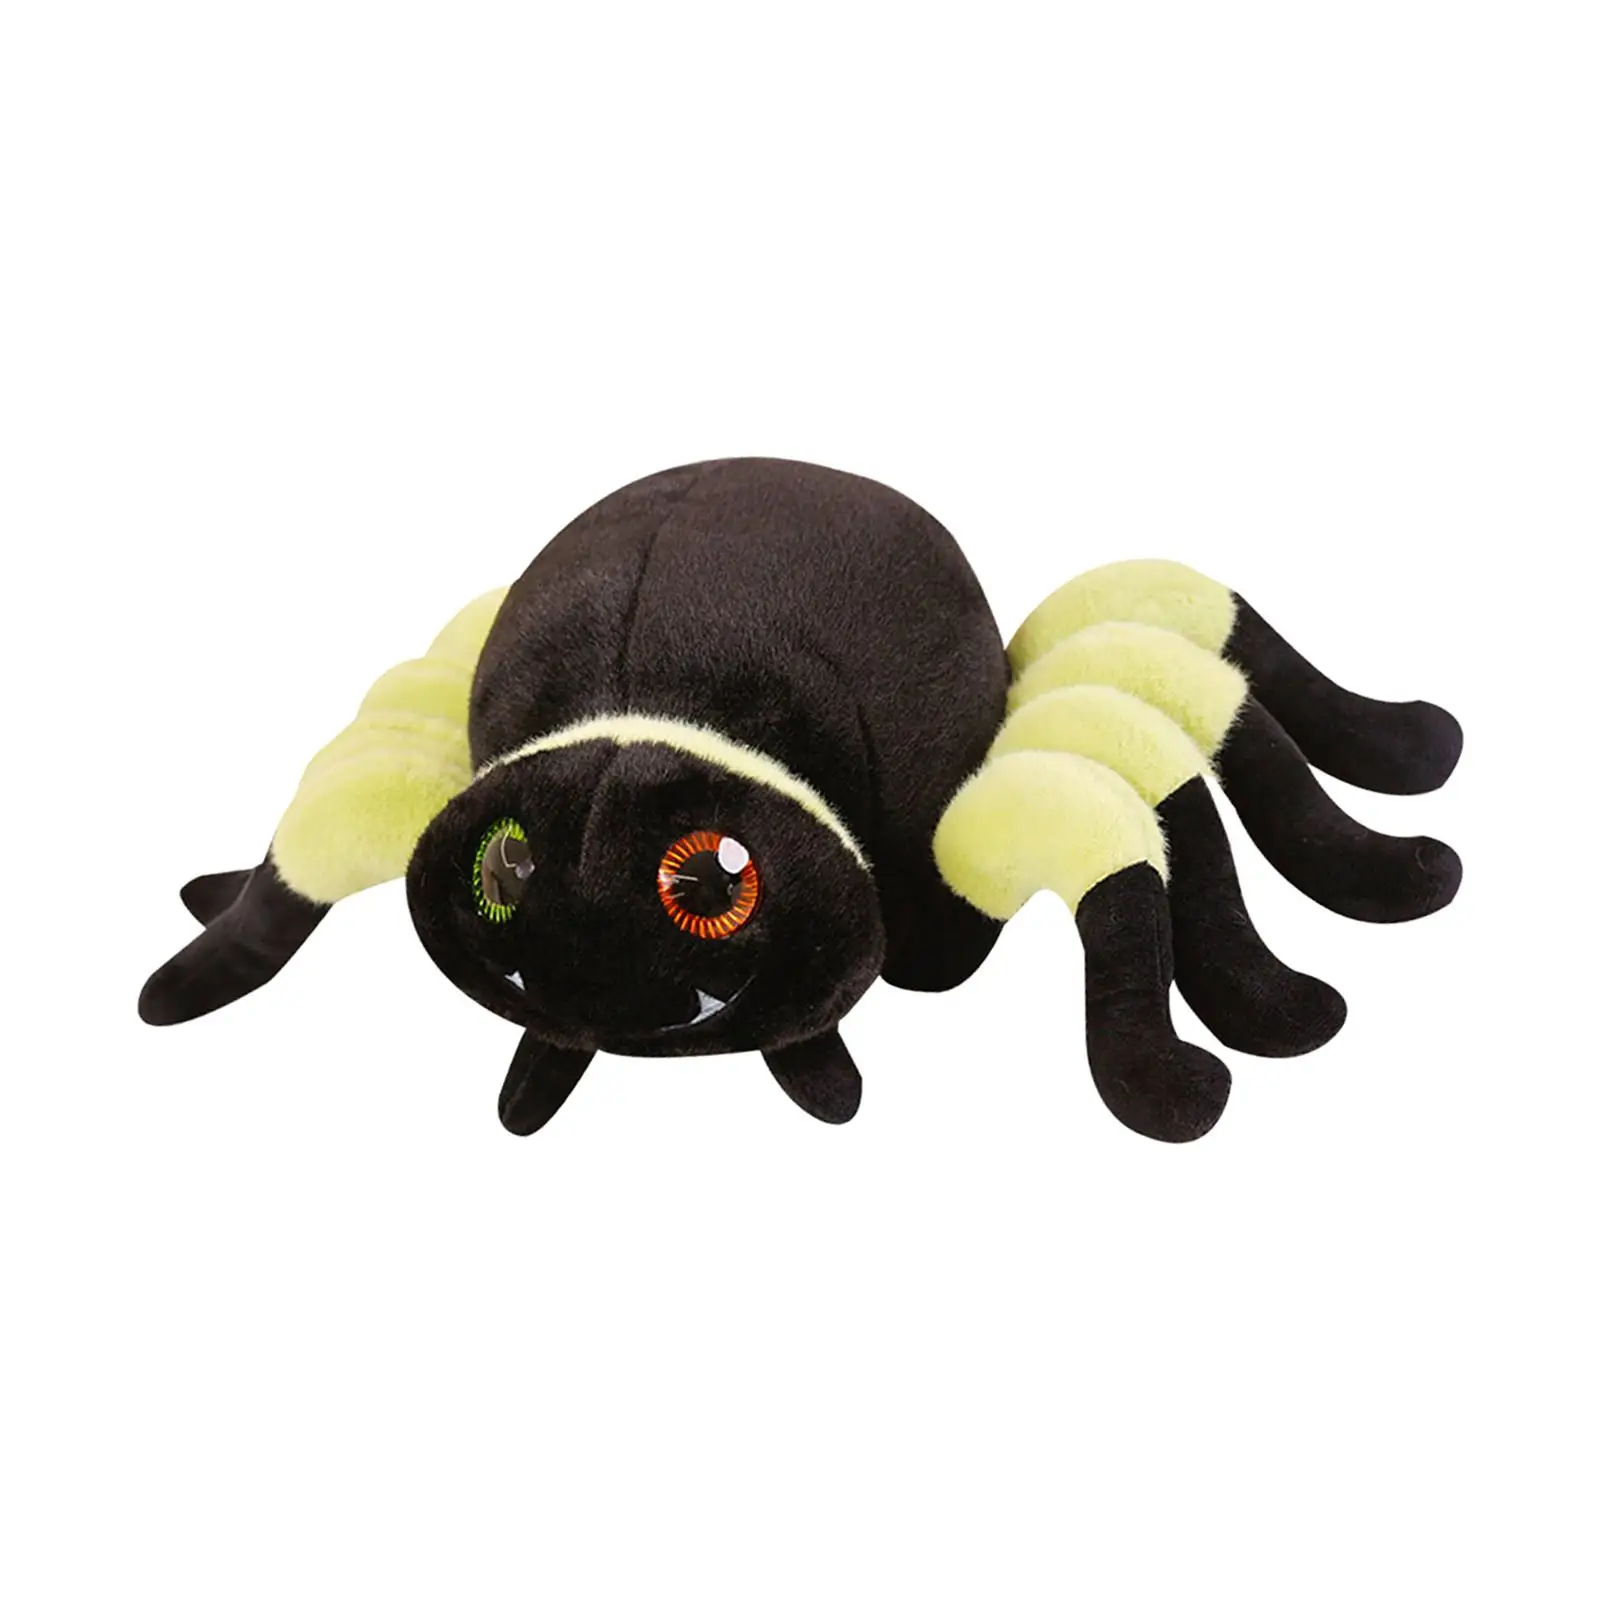 Soft Plush Animal Toy Spider Stuffed Animal Stuffed Animal Toy for Children Kids Adults Boys Girls Halloween Birthday Gift